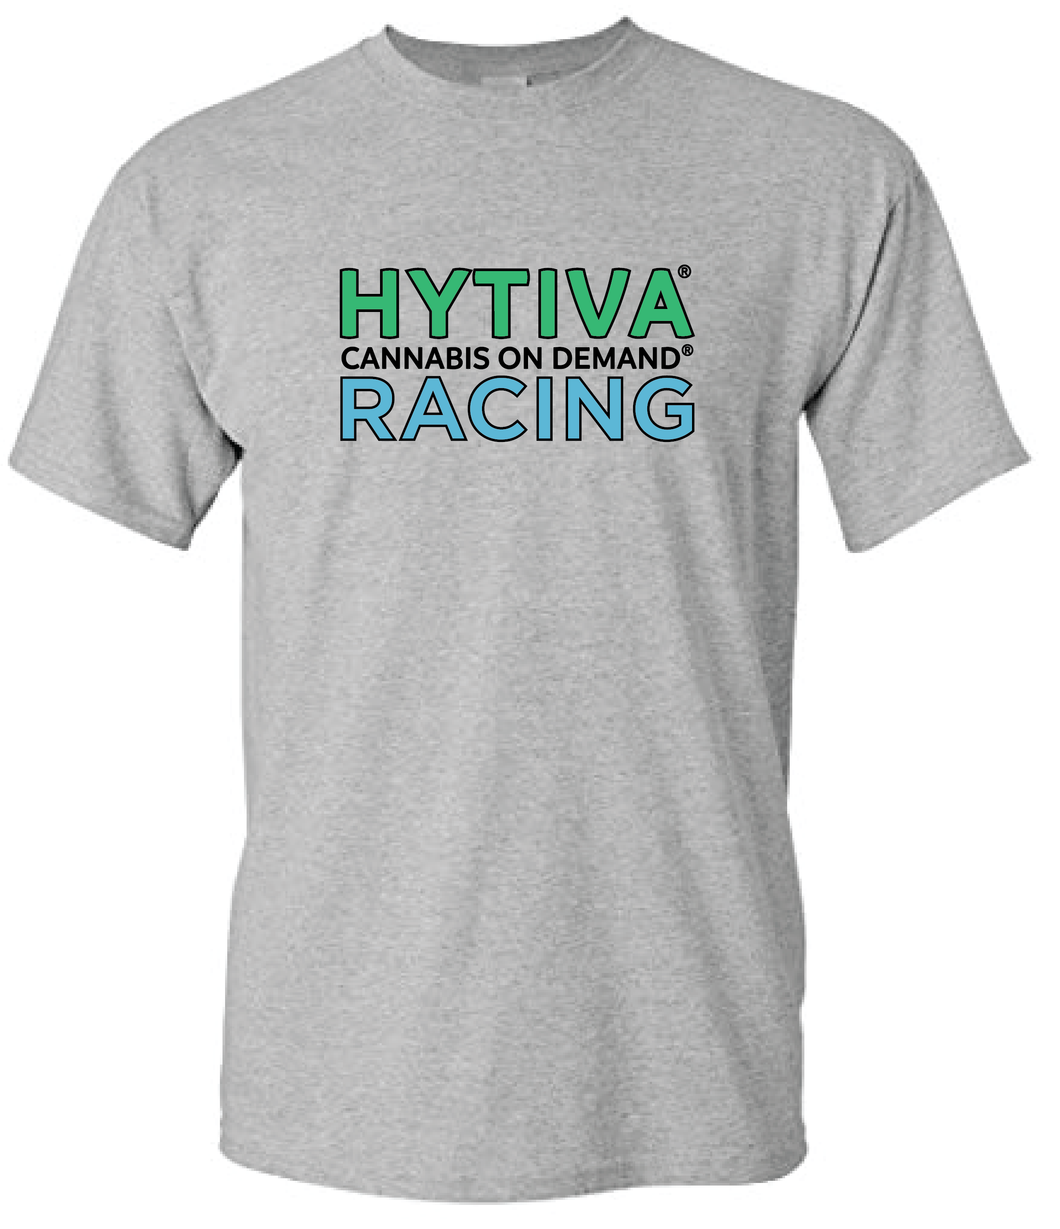 Hytiva Racing T-Shirt Gray